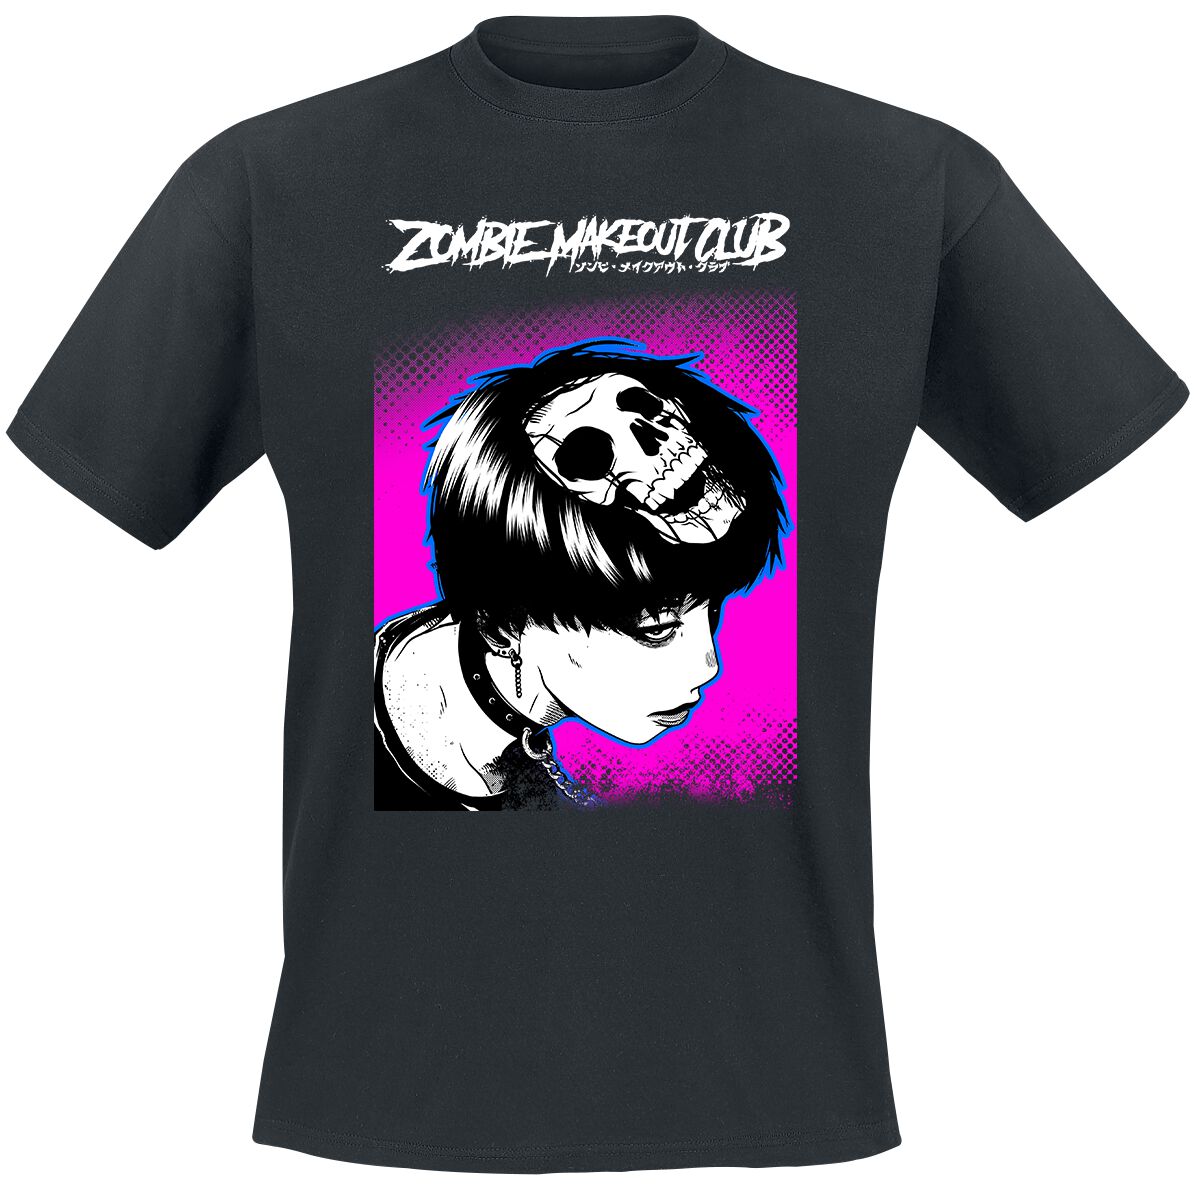 Zombie Makeout Club Dead Head T-Shirt schwarz in M